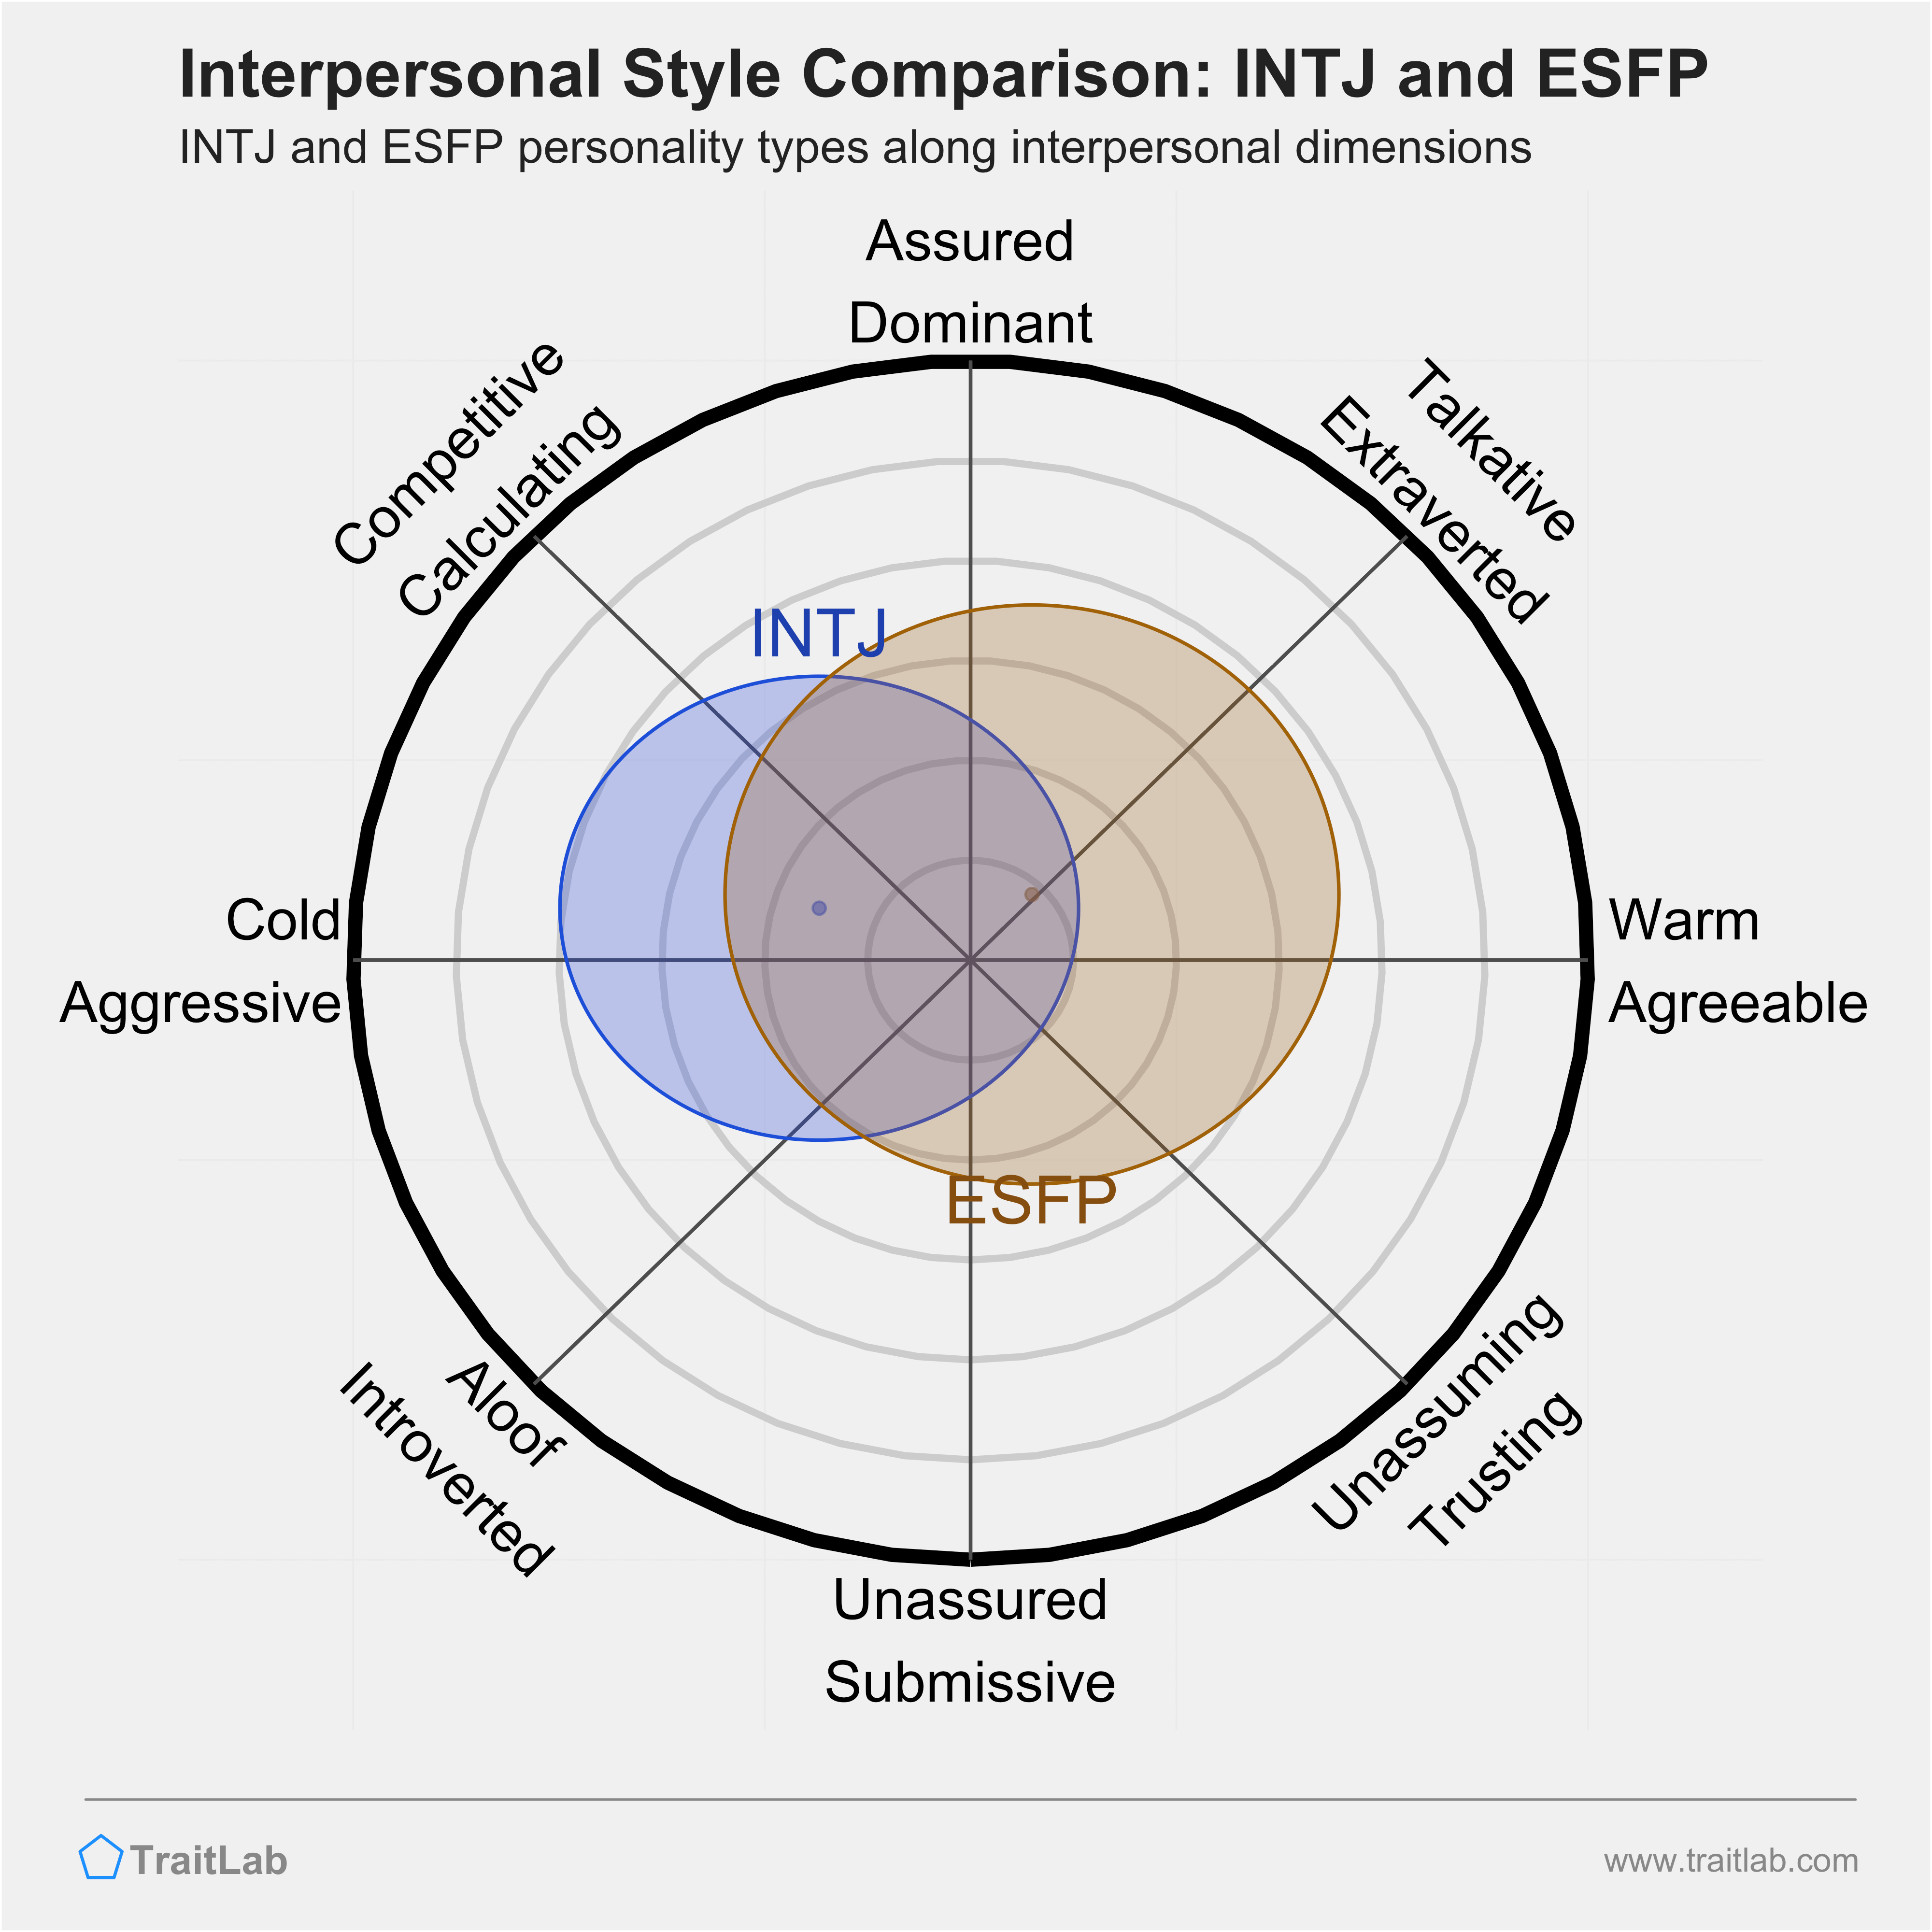 INTJ and ESFP comparison across interpersonal dimensions